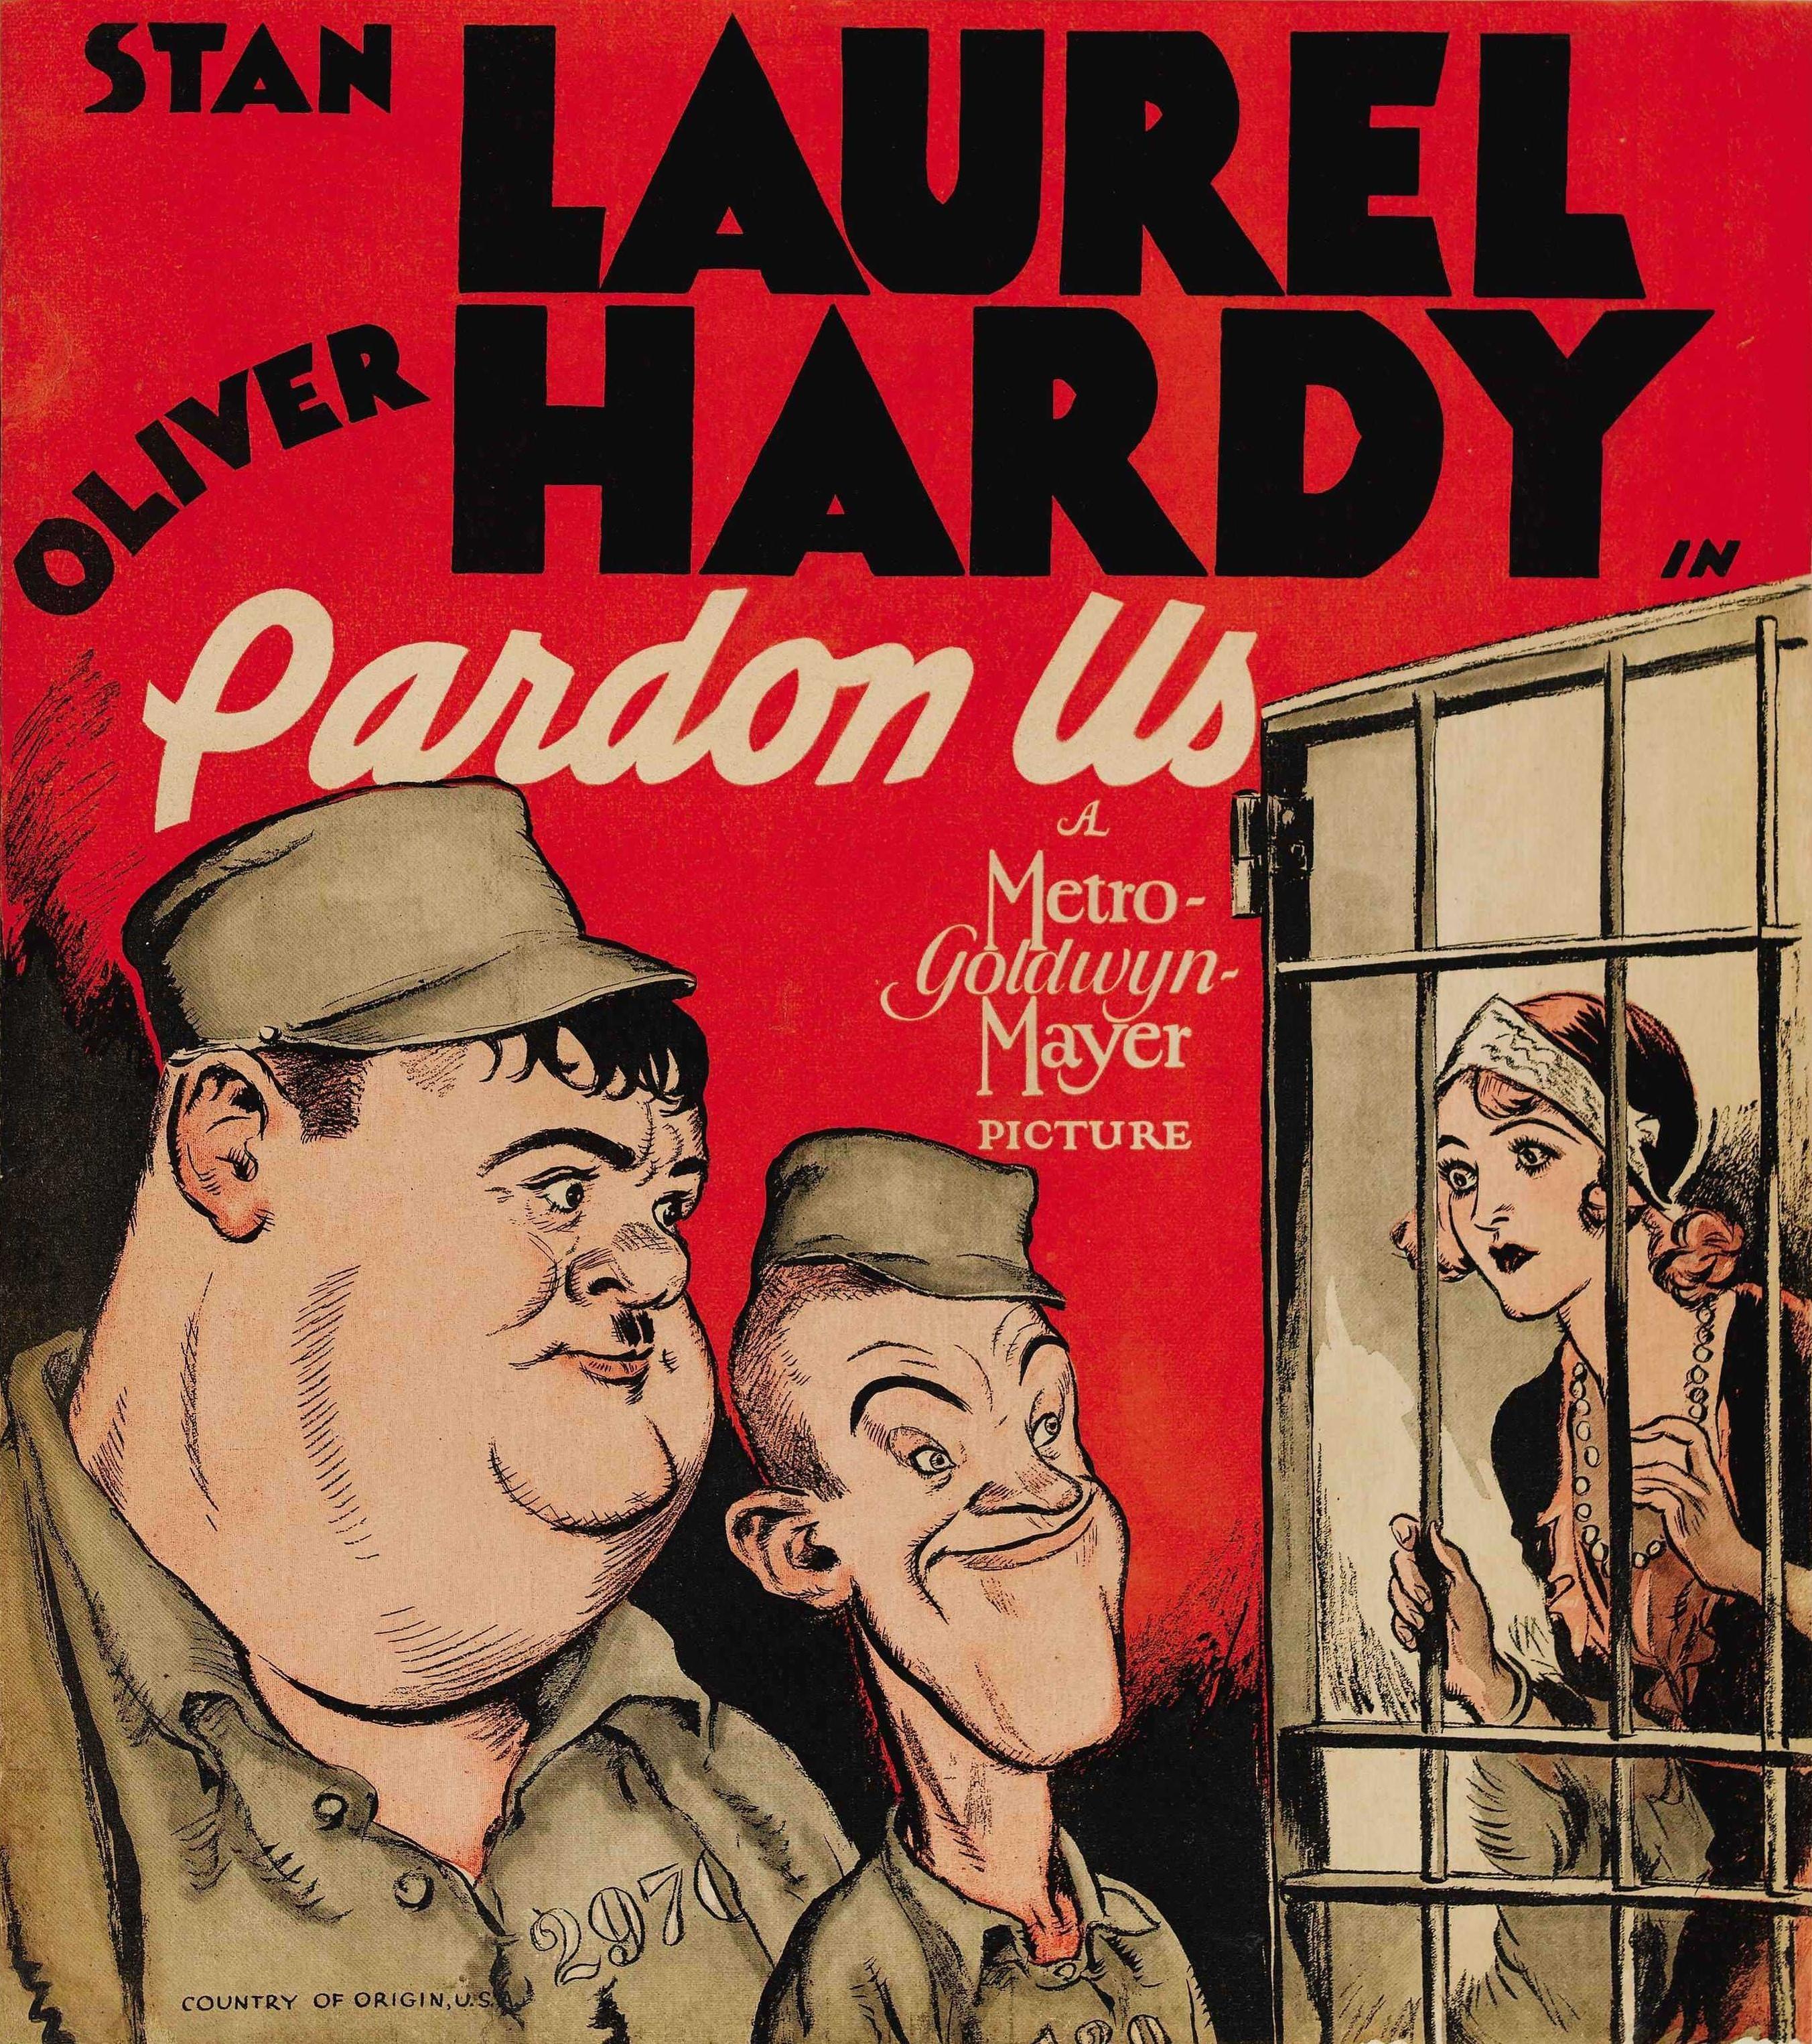 Pardon us 1931. Laurel and Hardy poster plakaty. Stan Laurel and Oliver Hardy poster plakaty. Laurel & Hardy Постер. Миль пардон мадам краткое содержание